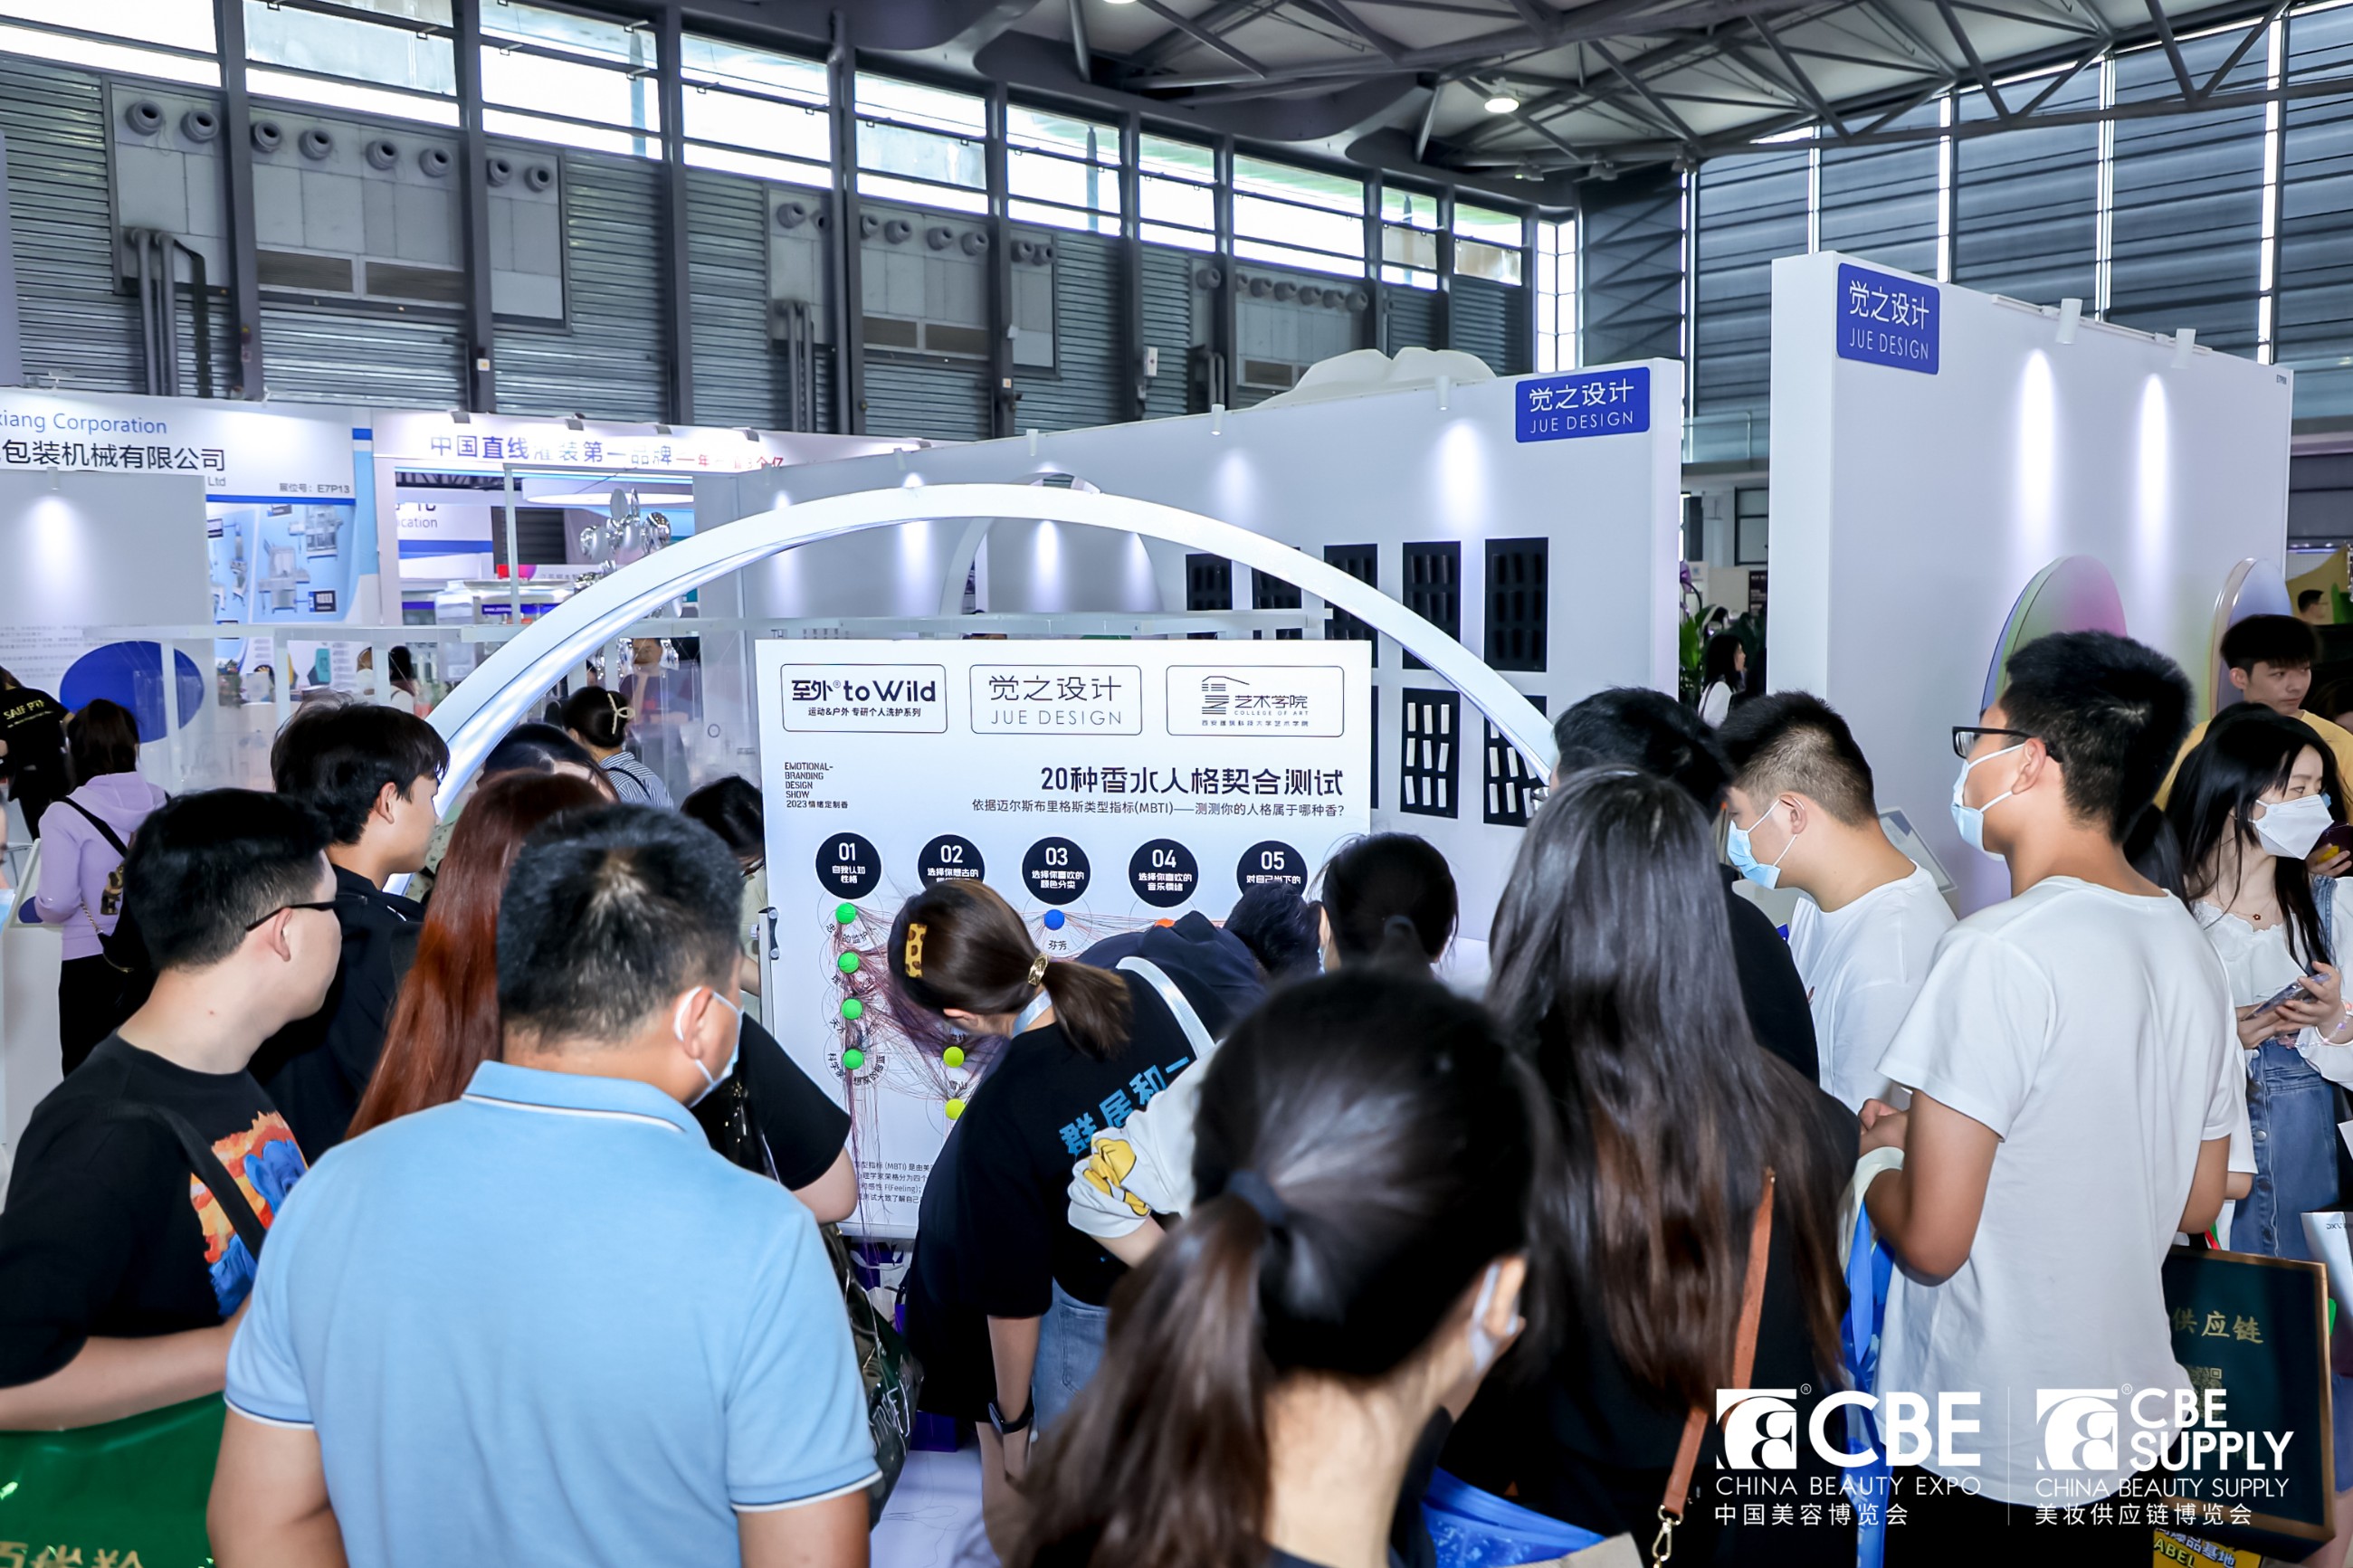 2025CBE SUPPLY上海国际美妆供应链展览会